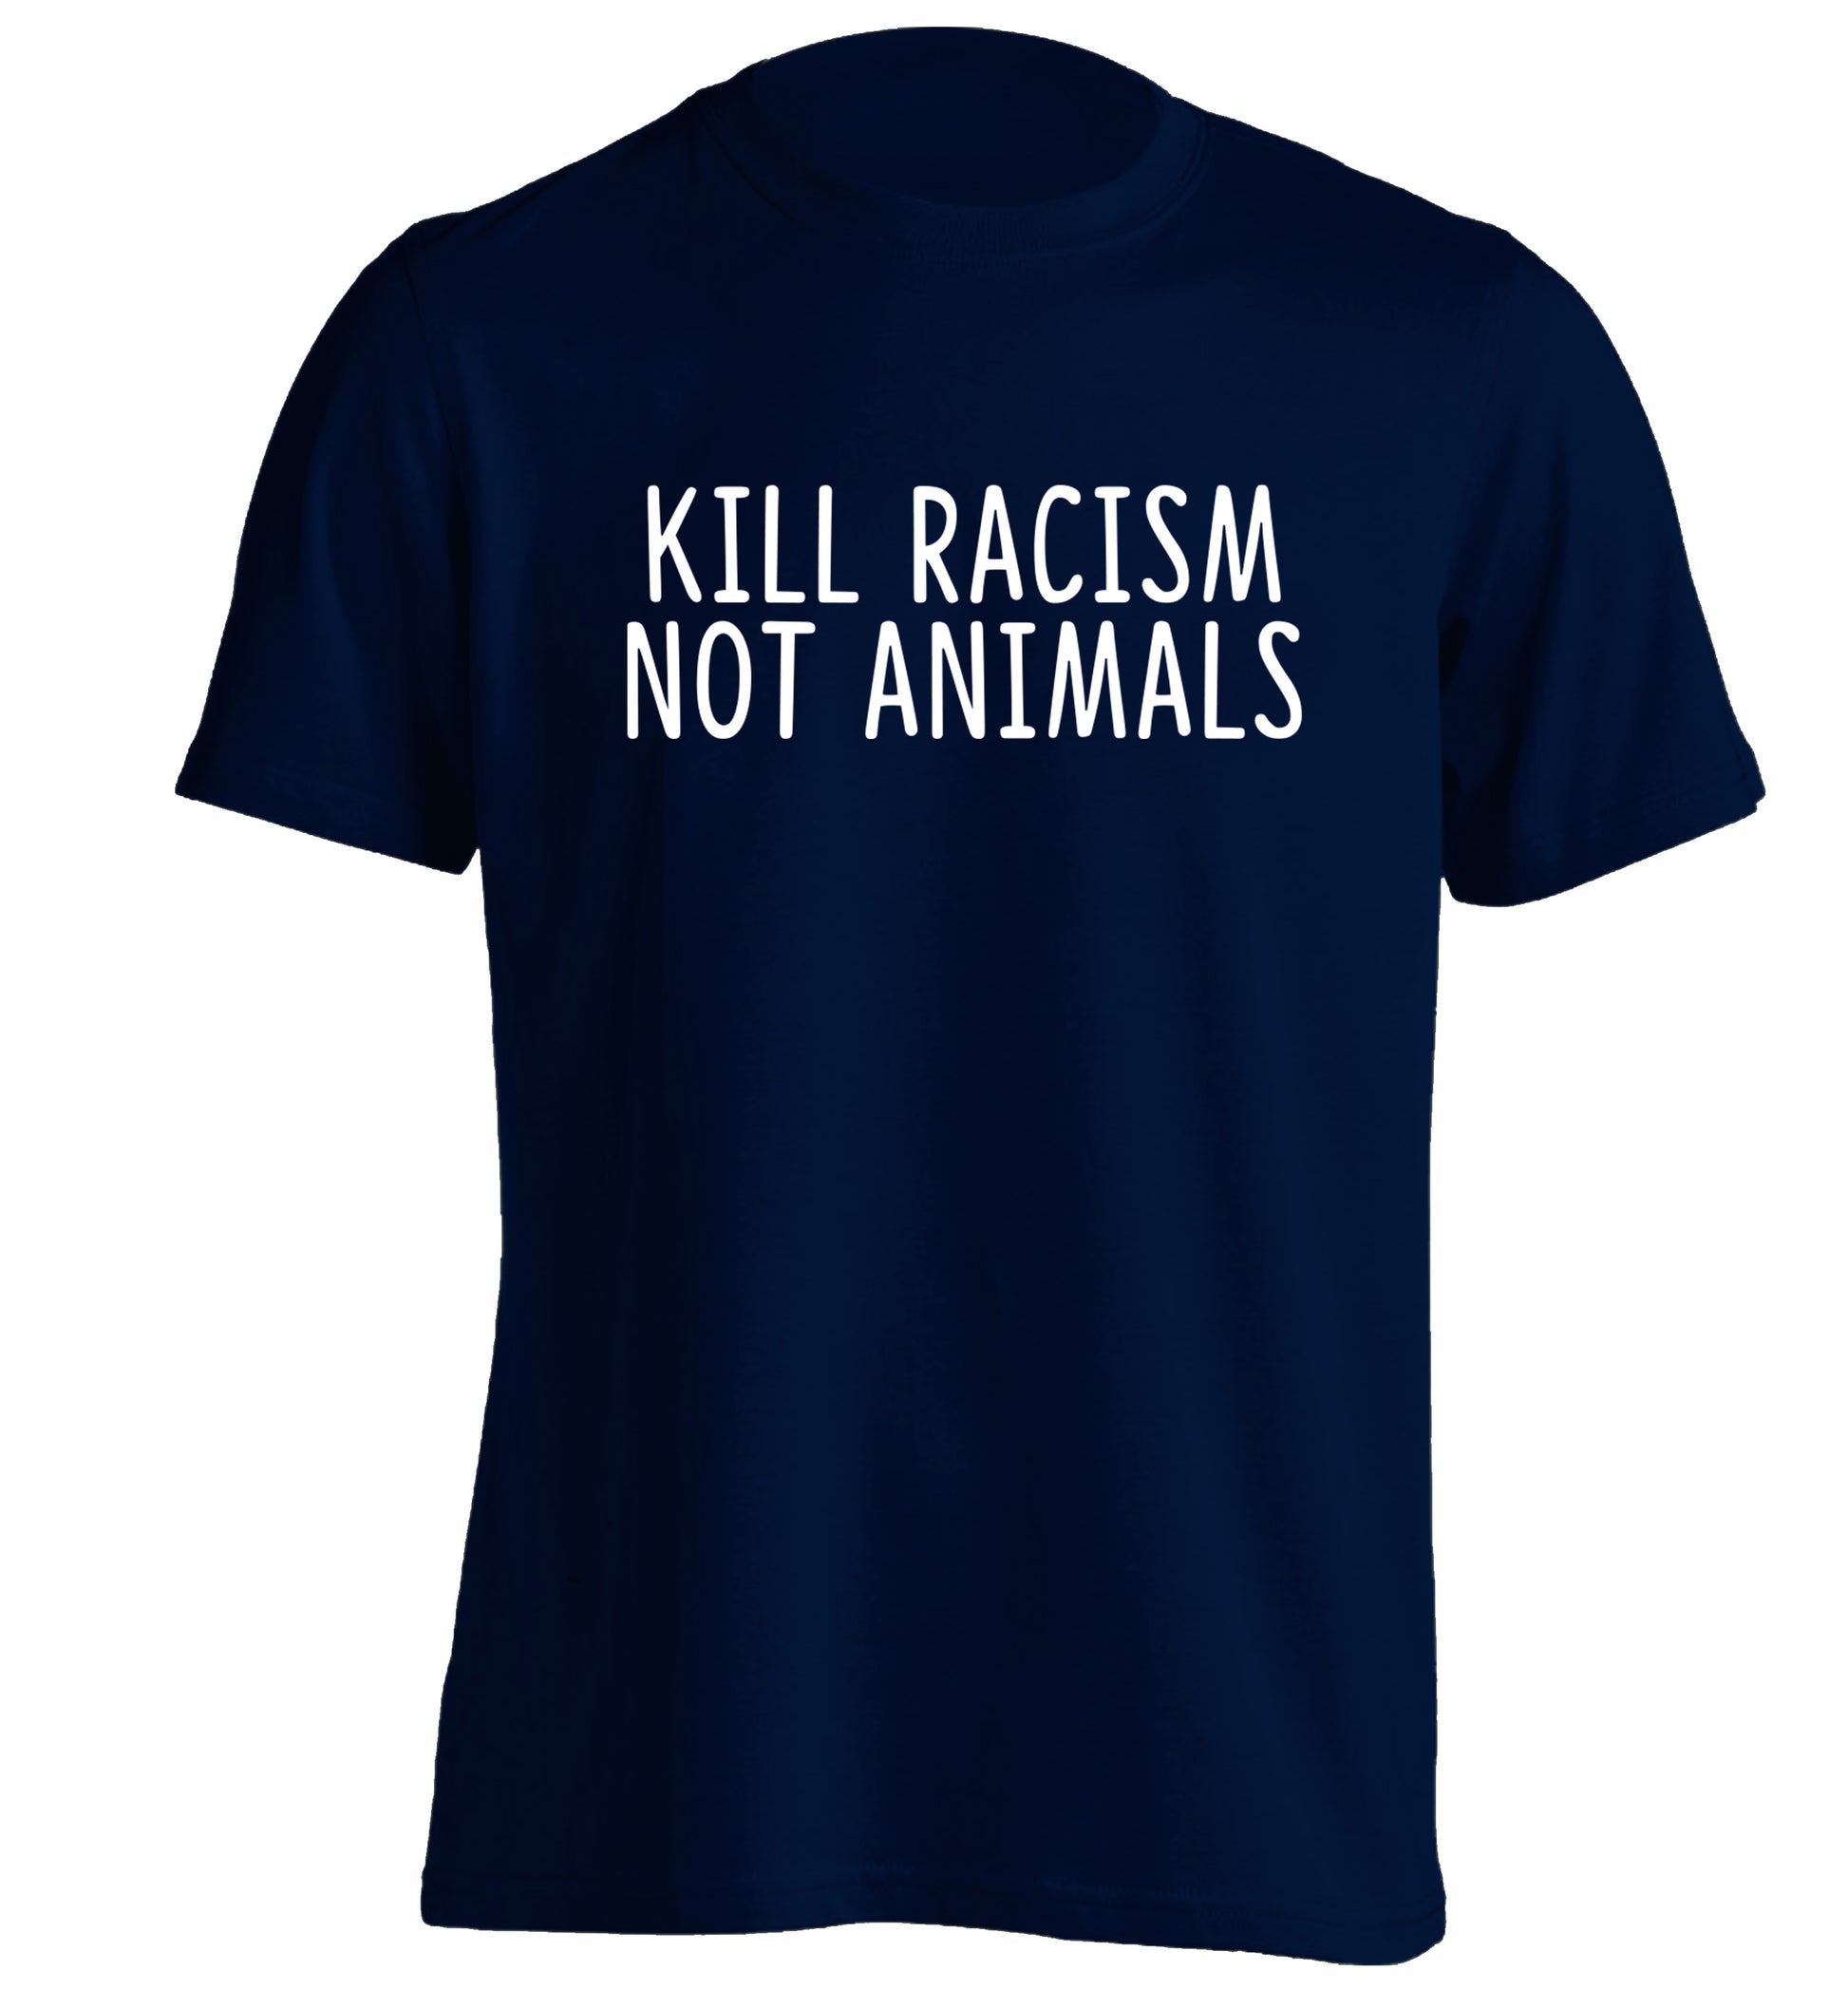 Kill Racism Not Animals adults unisex navy Tshirt 2XL